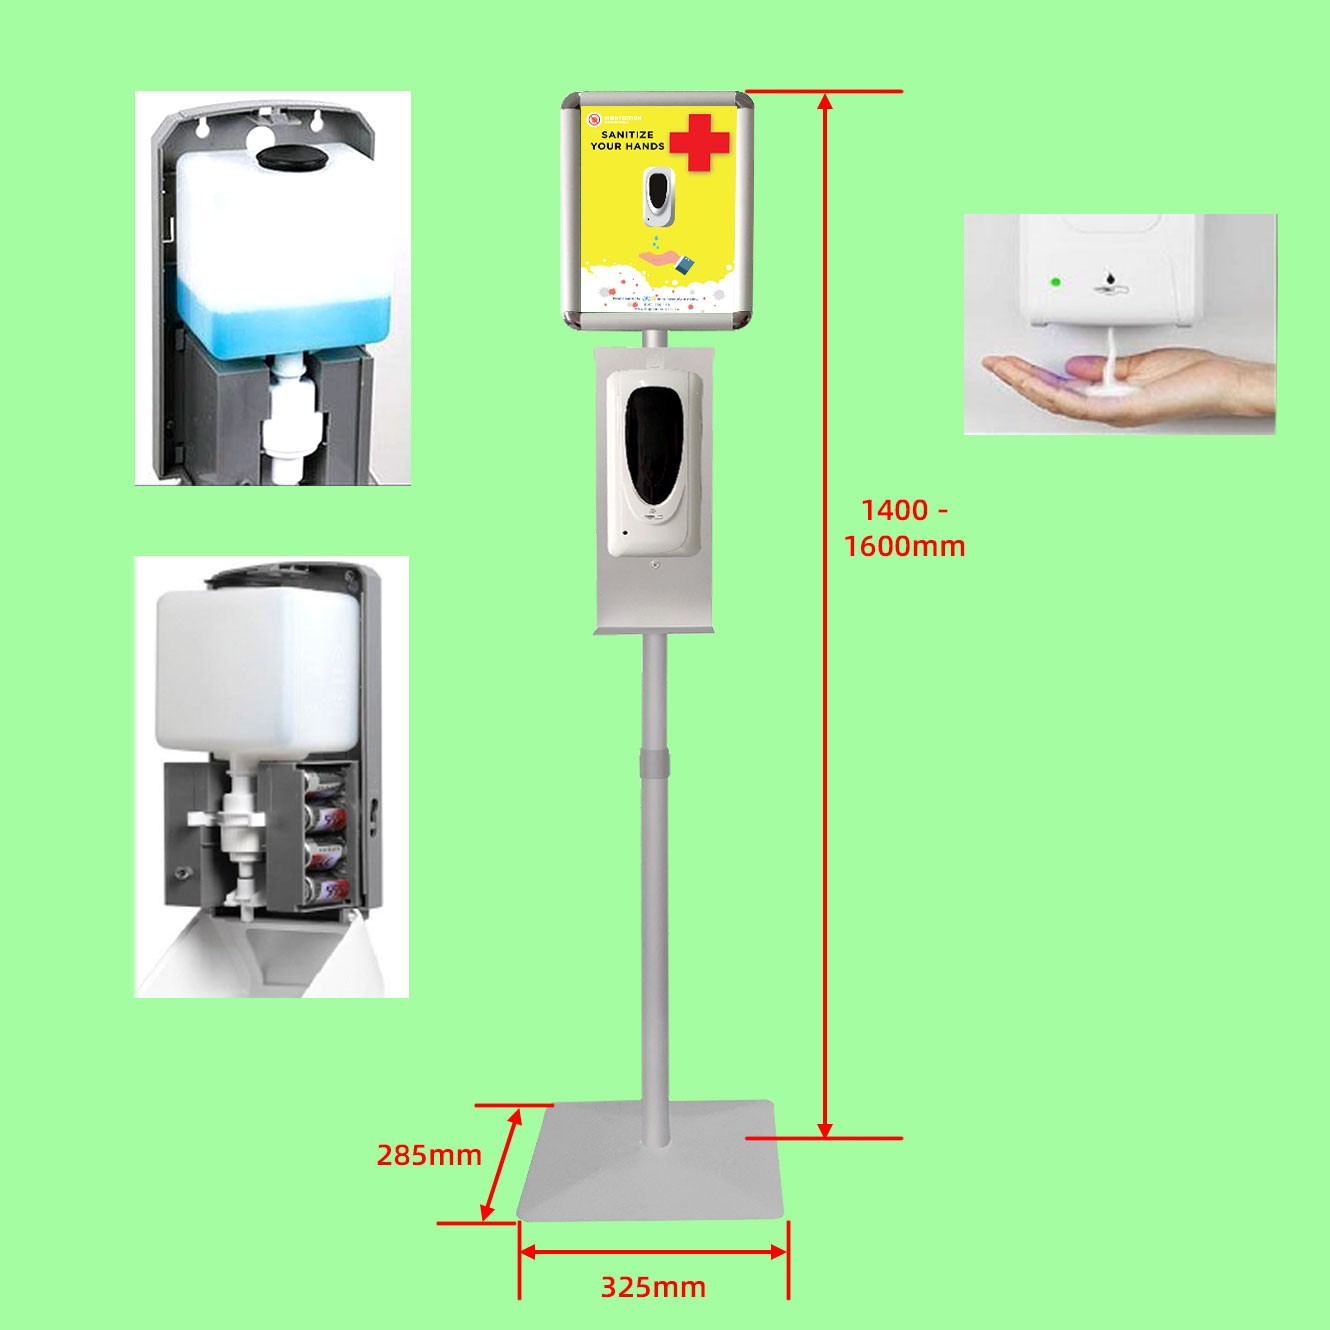 https://bigbanner.com.au/wp-content/uploads/2020/04/free-standing-touchfree_automatic-hand-sanitiser-dispenser31.jpg